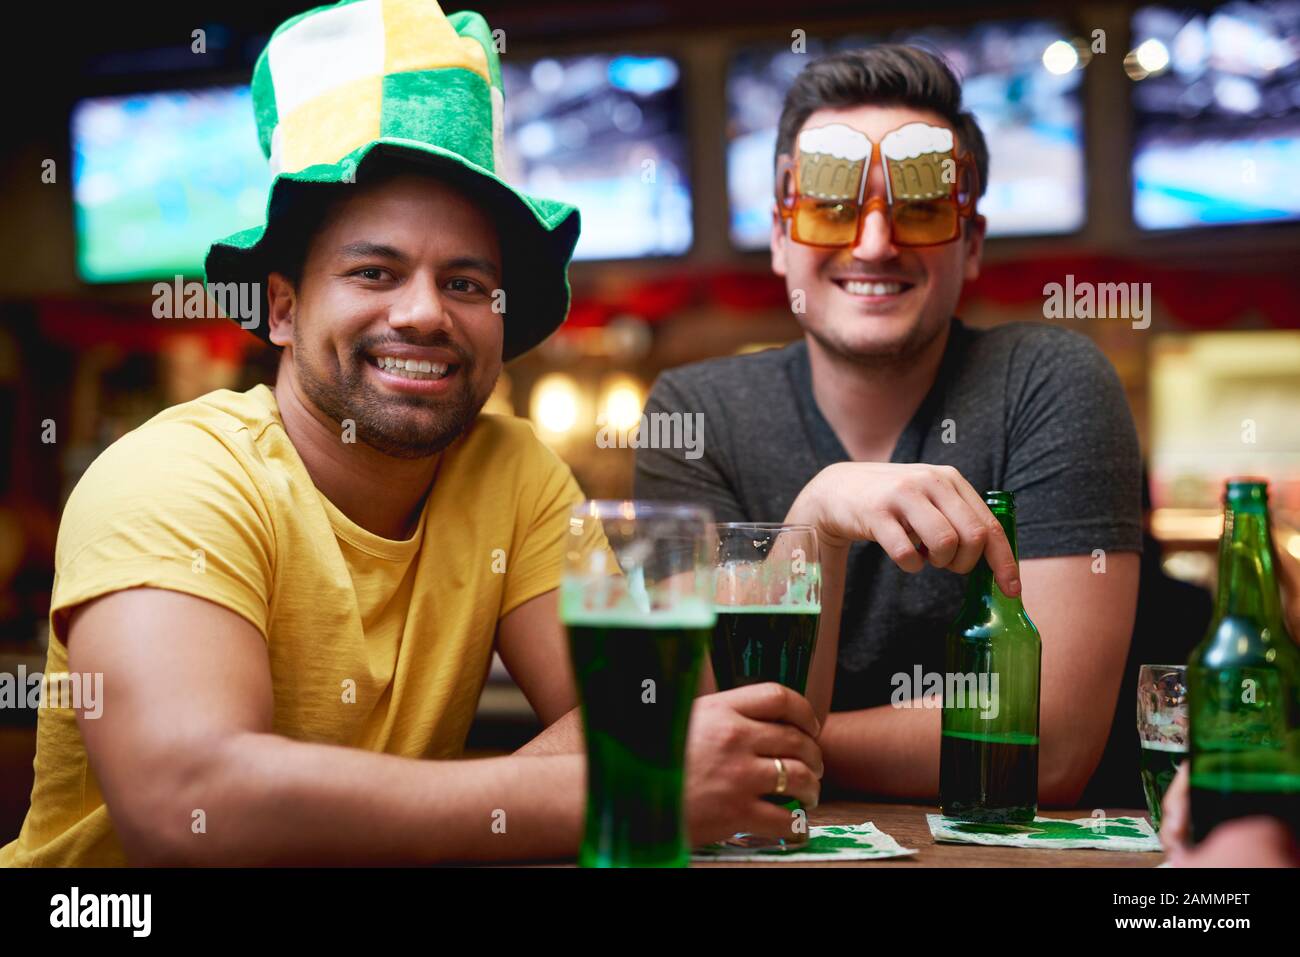 Men with leprechaun's hat and beer celebrating Saint Patrick's Day Stock Photo